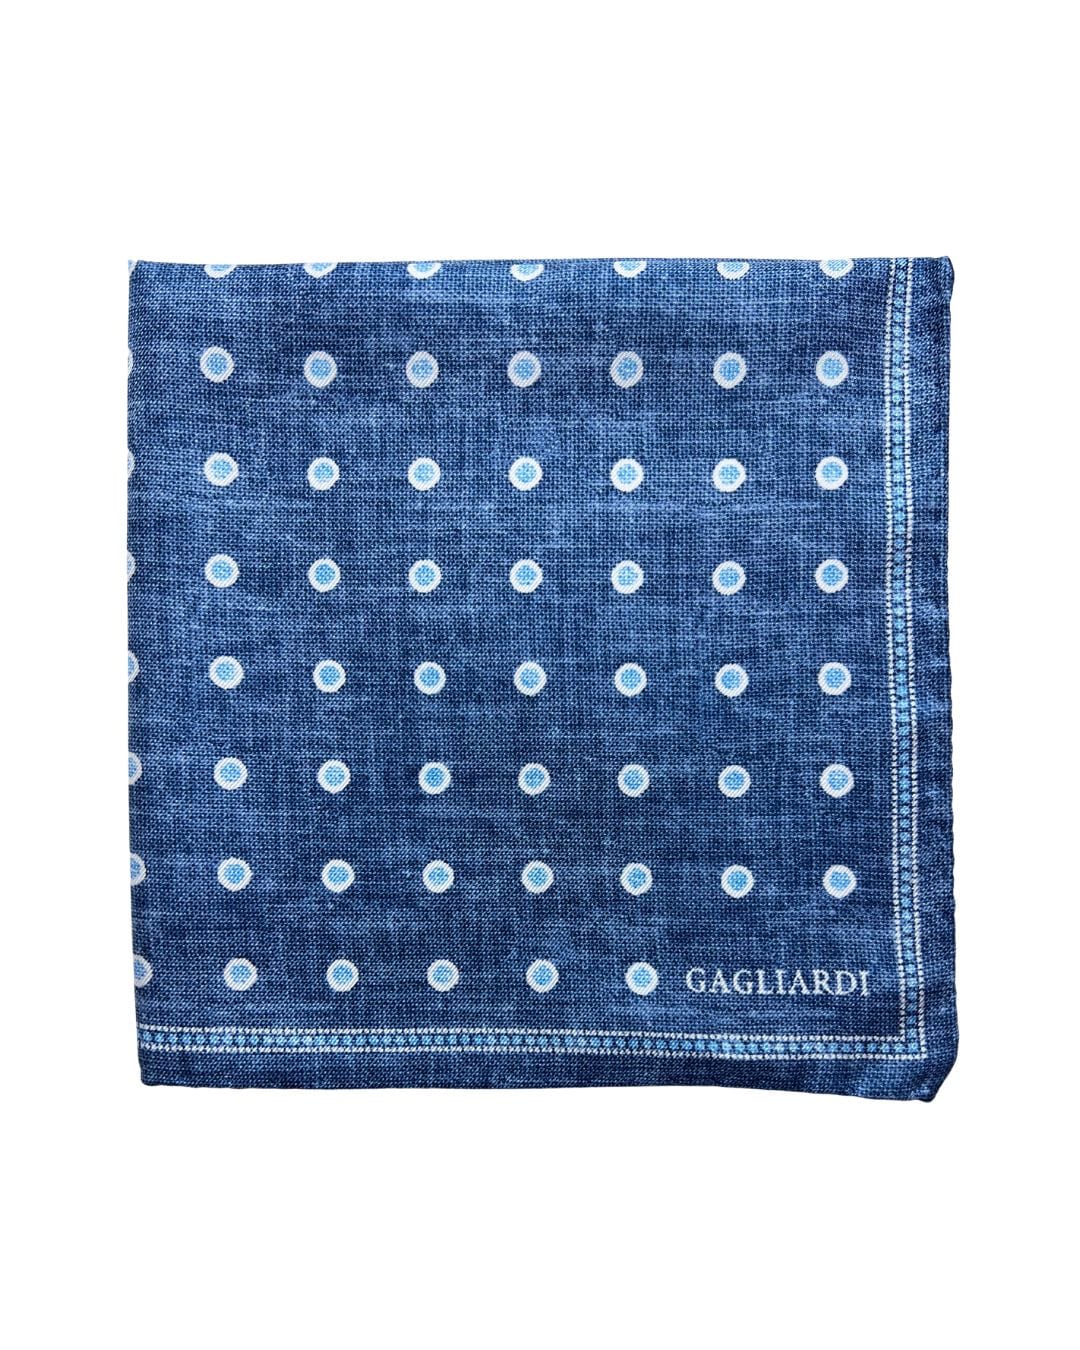 Gagliardi Pocket Squares ONE SIZE Gagliardi Blue Two Colour Spot Print Italian Silk Pocket Square